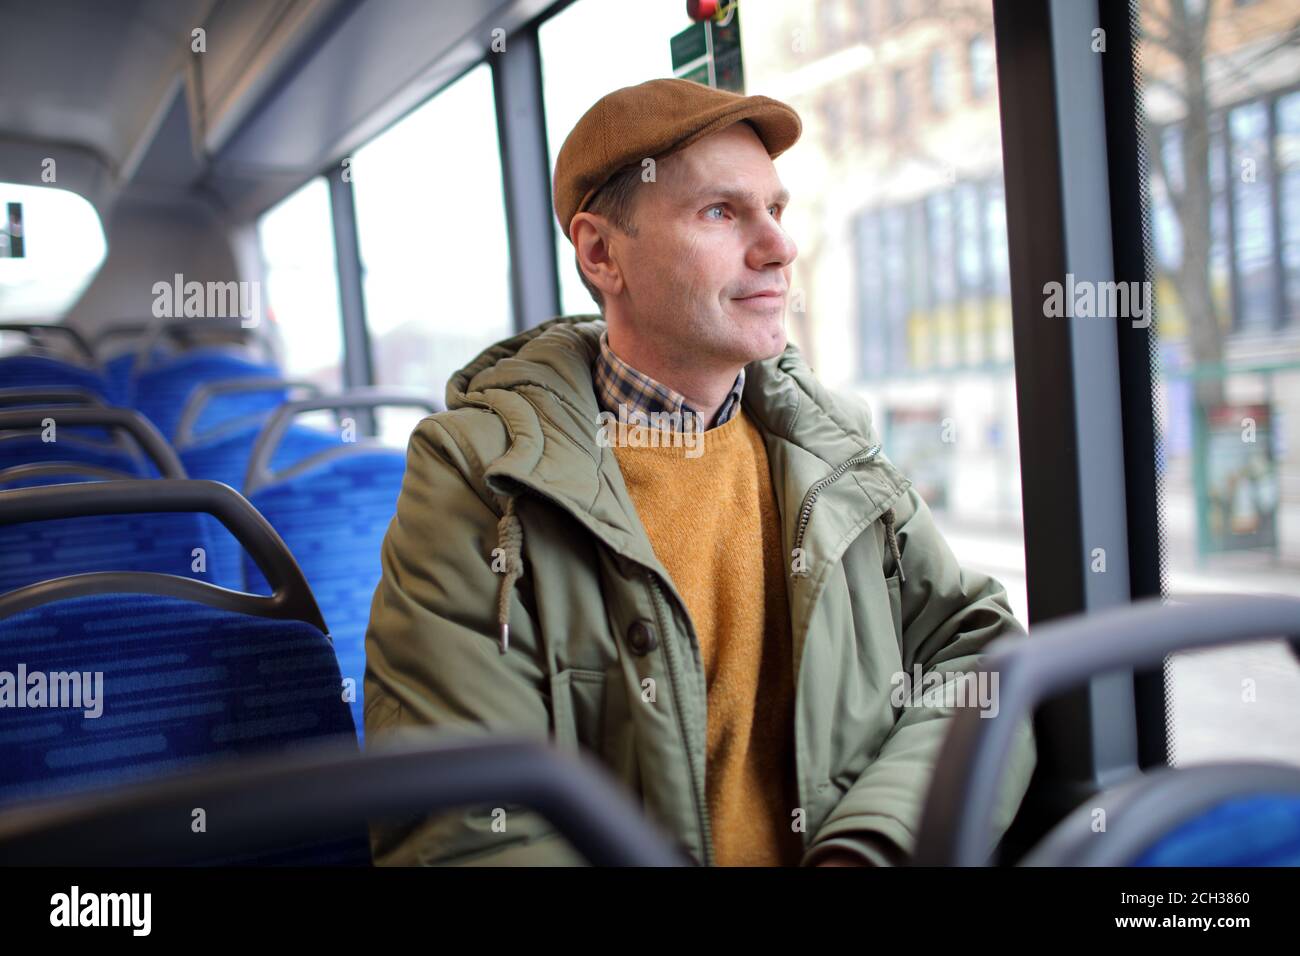 Mature Caucasian man sitting in a public bus Stock Photo